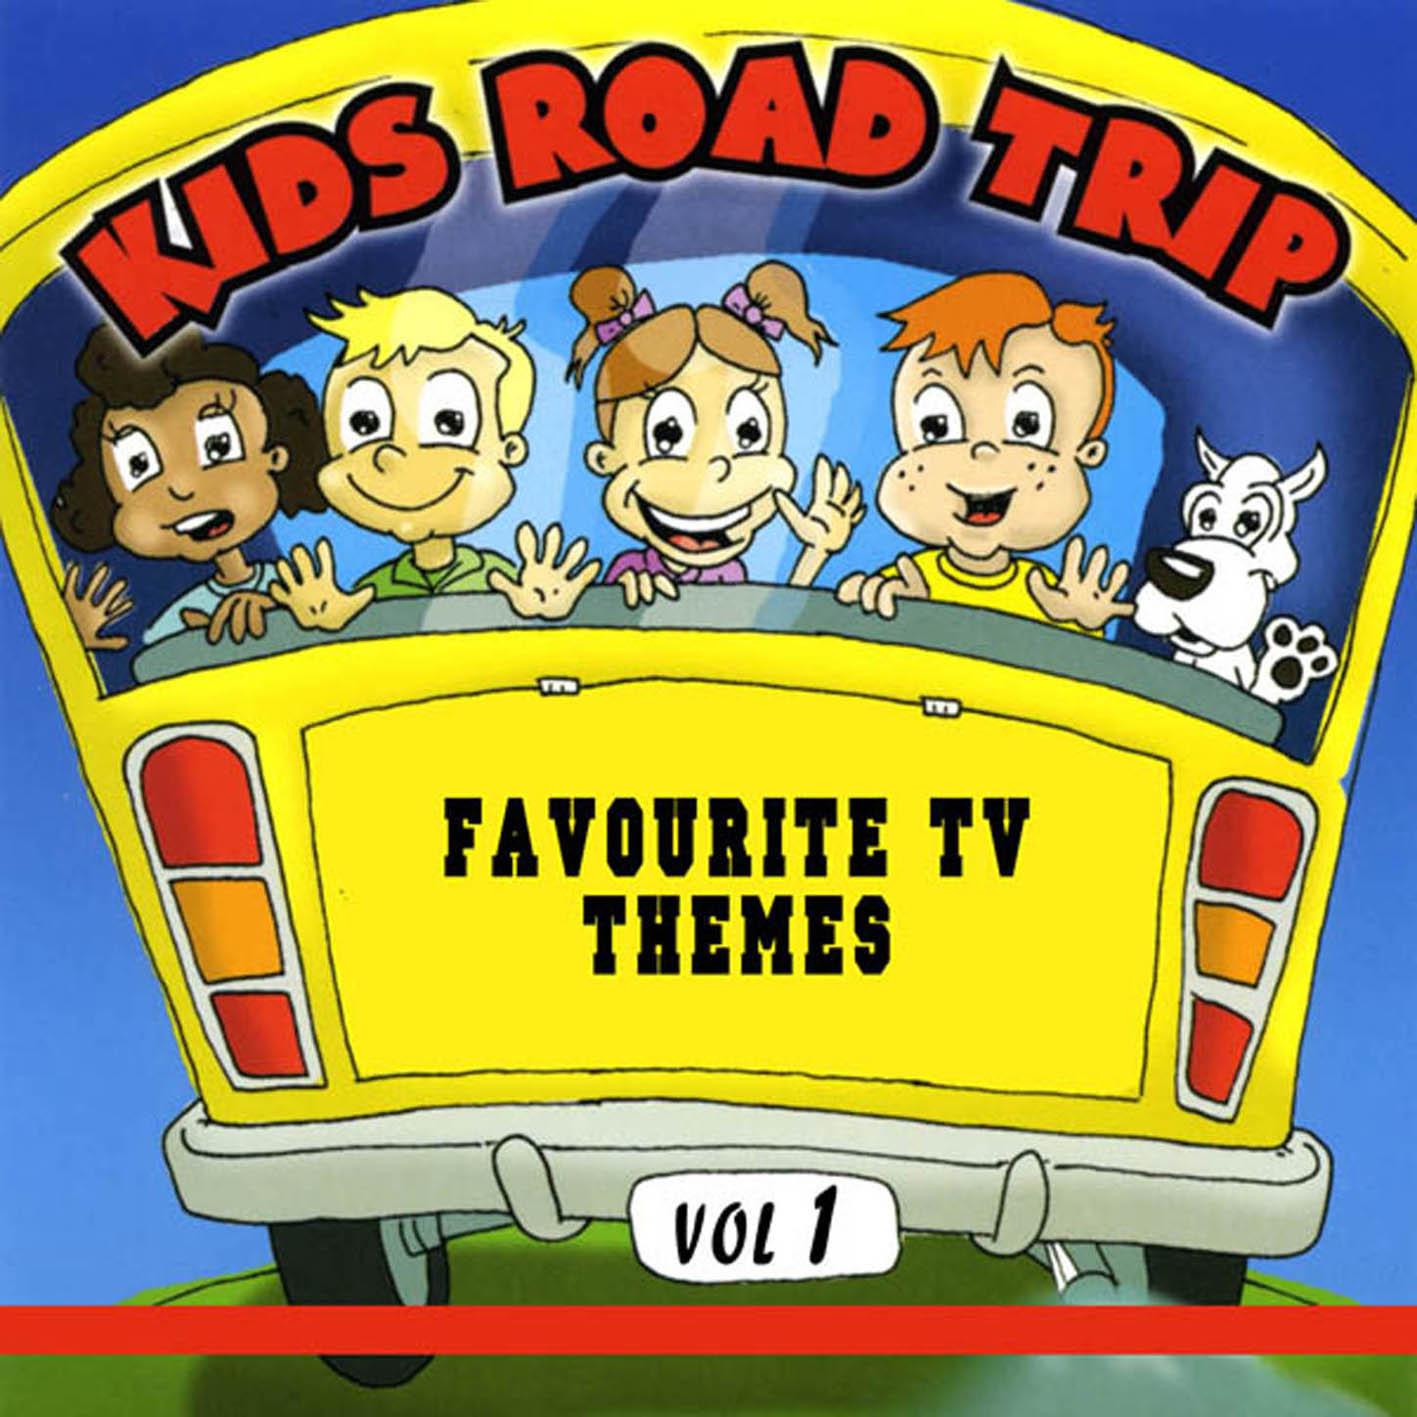 Kids Road Trip Vol.1 - Favourite TV Themes